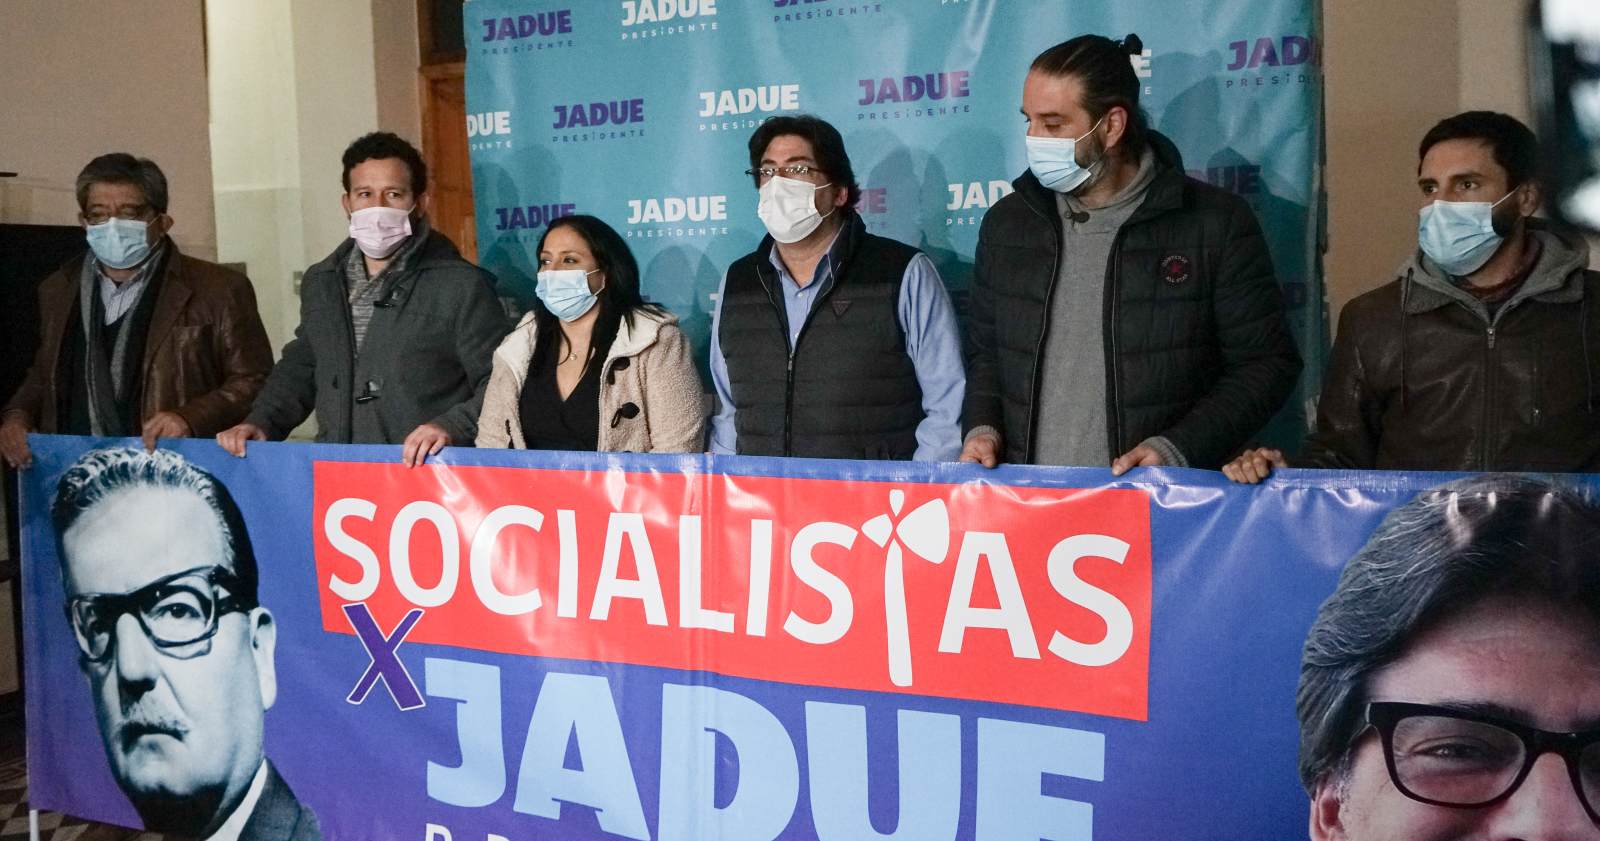 Jadue Socialistas